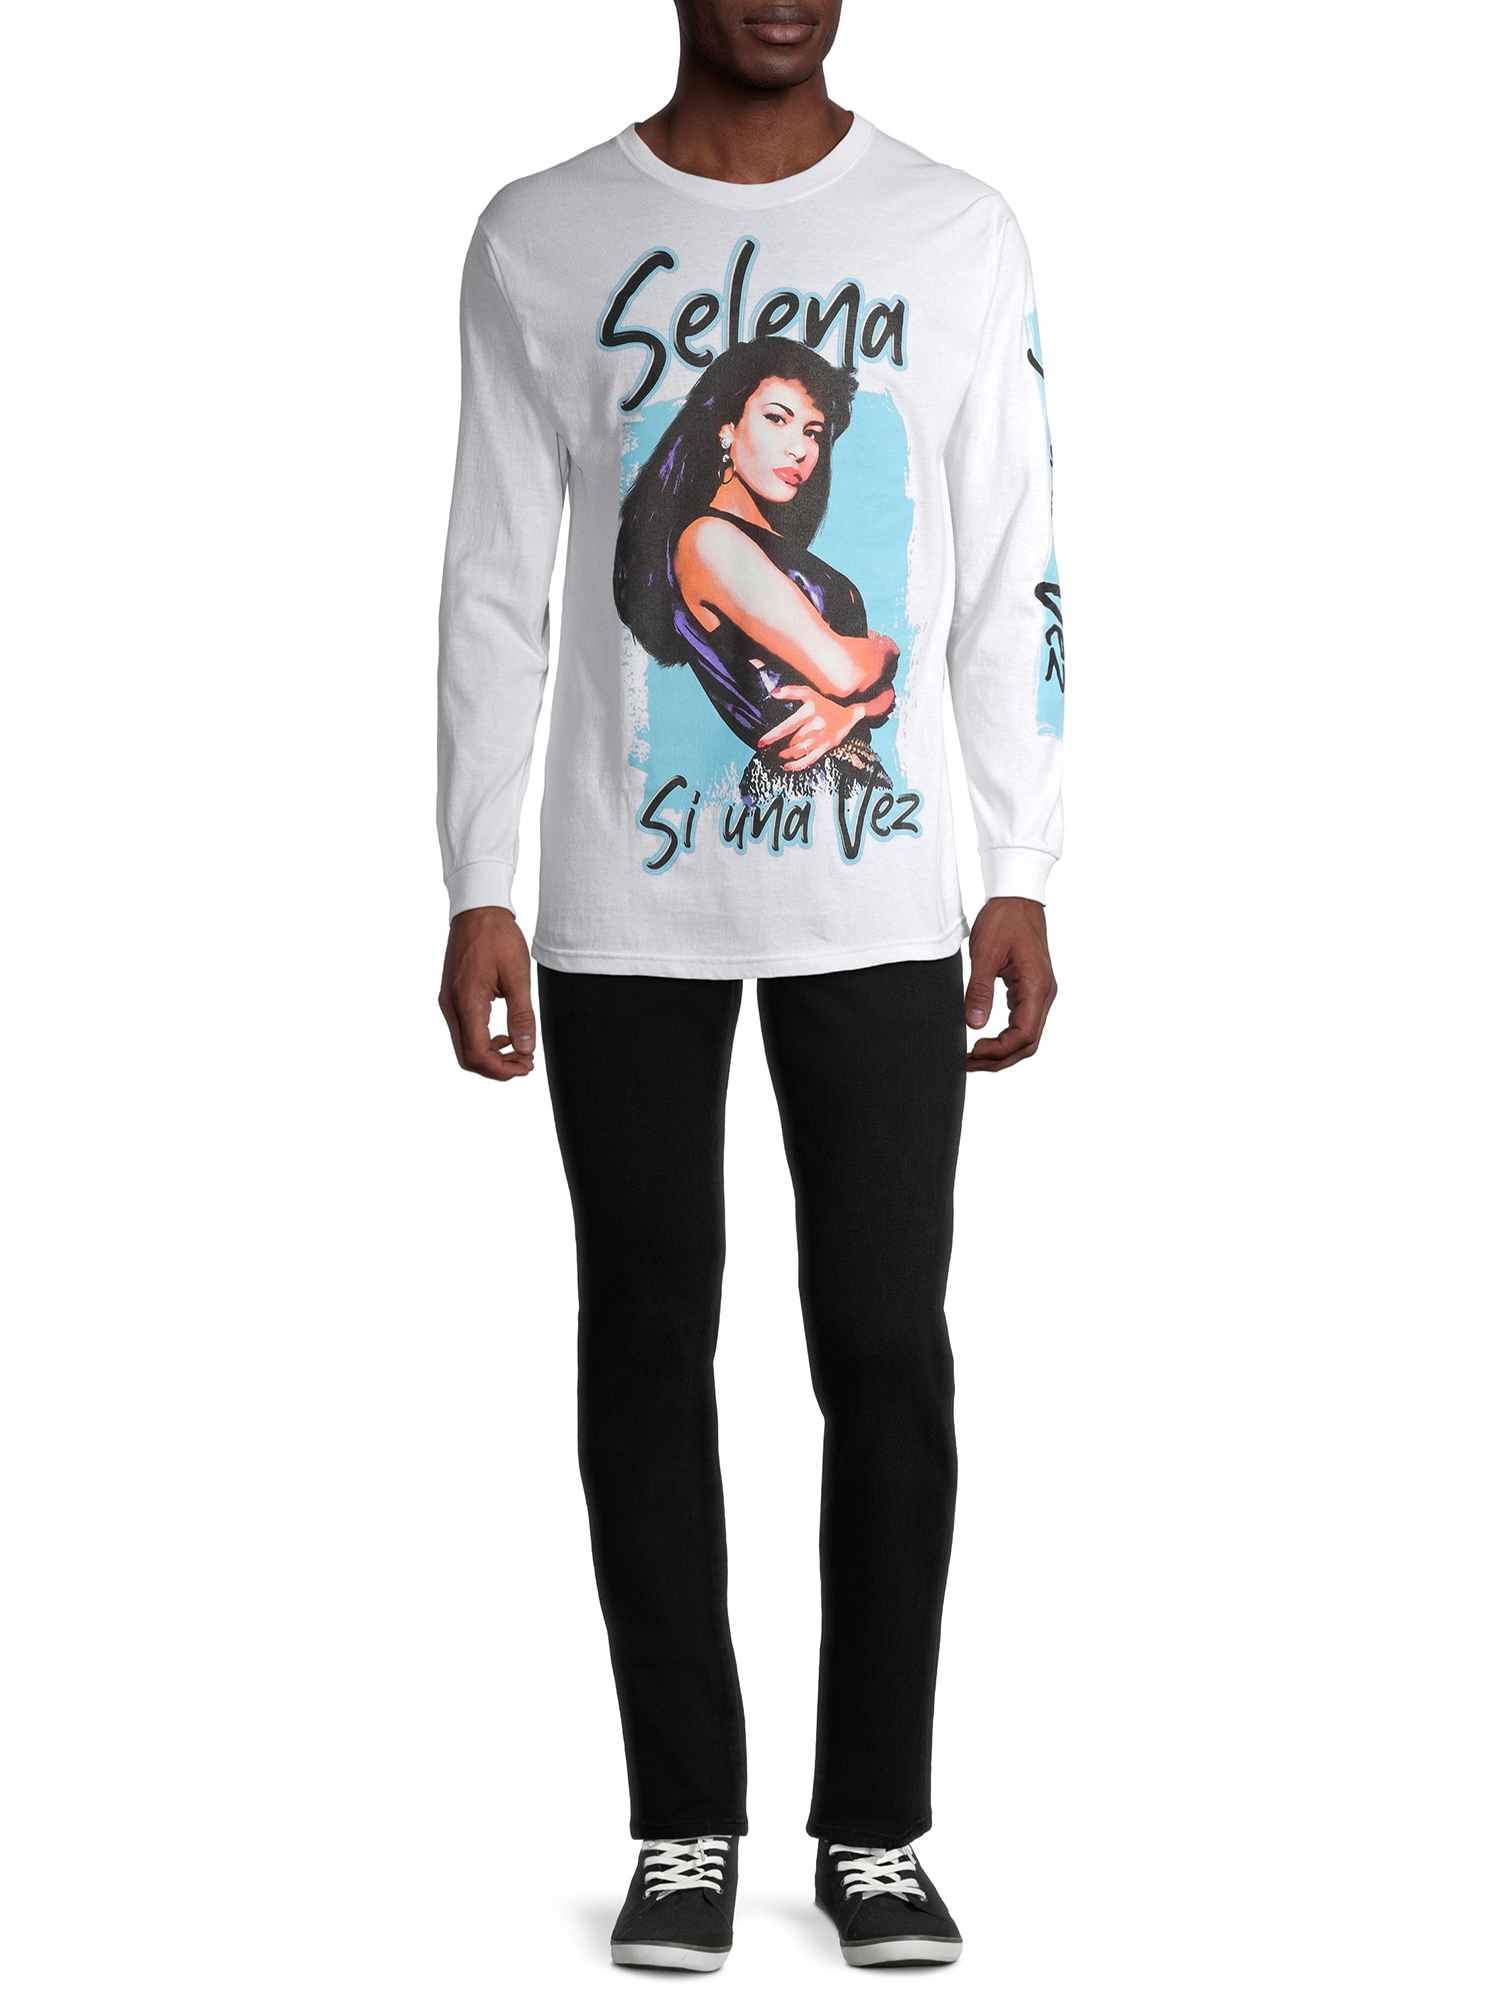 Syanne💙🌻 on X: Selena wearing the LV Qiyana shirt has made my